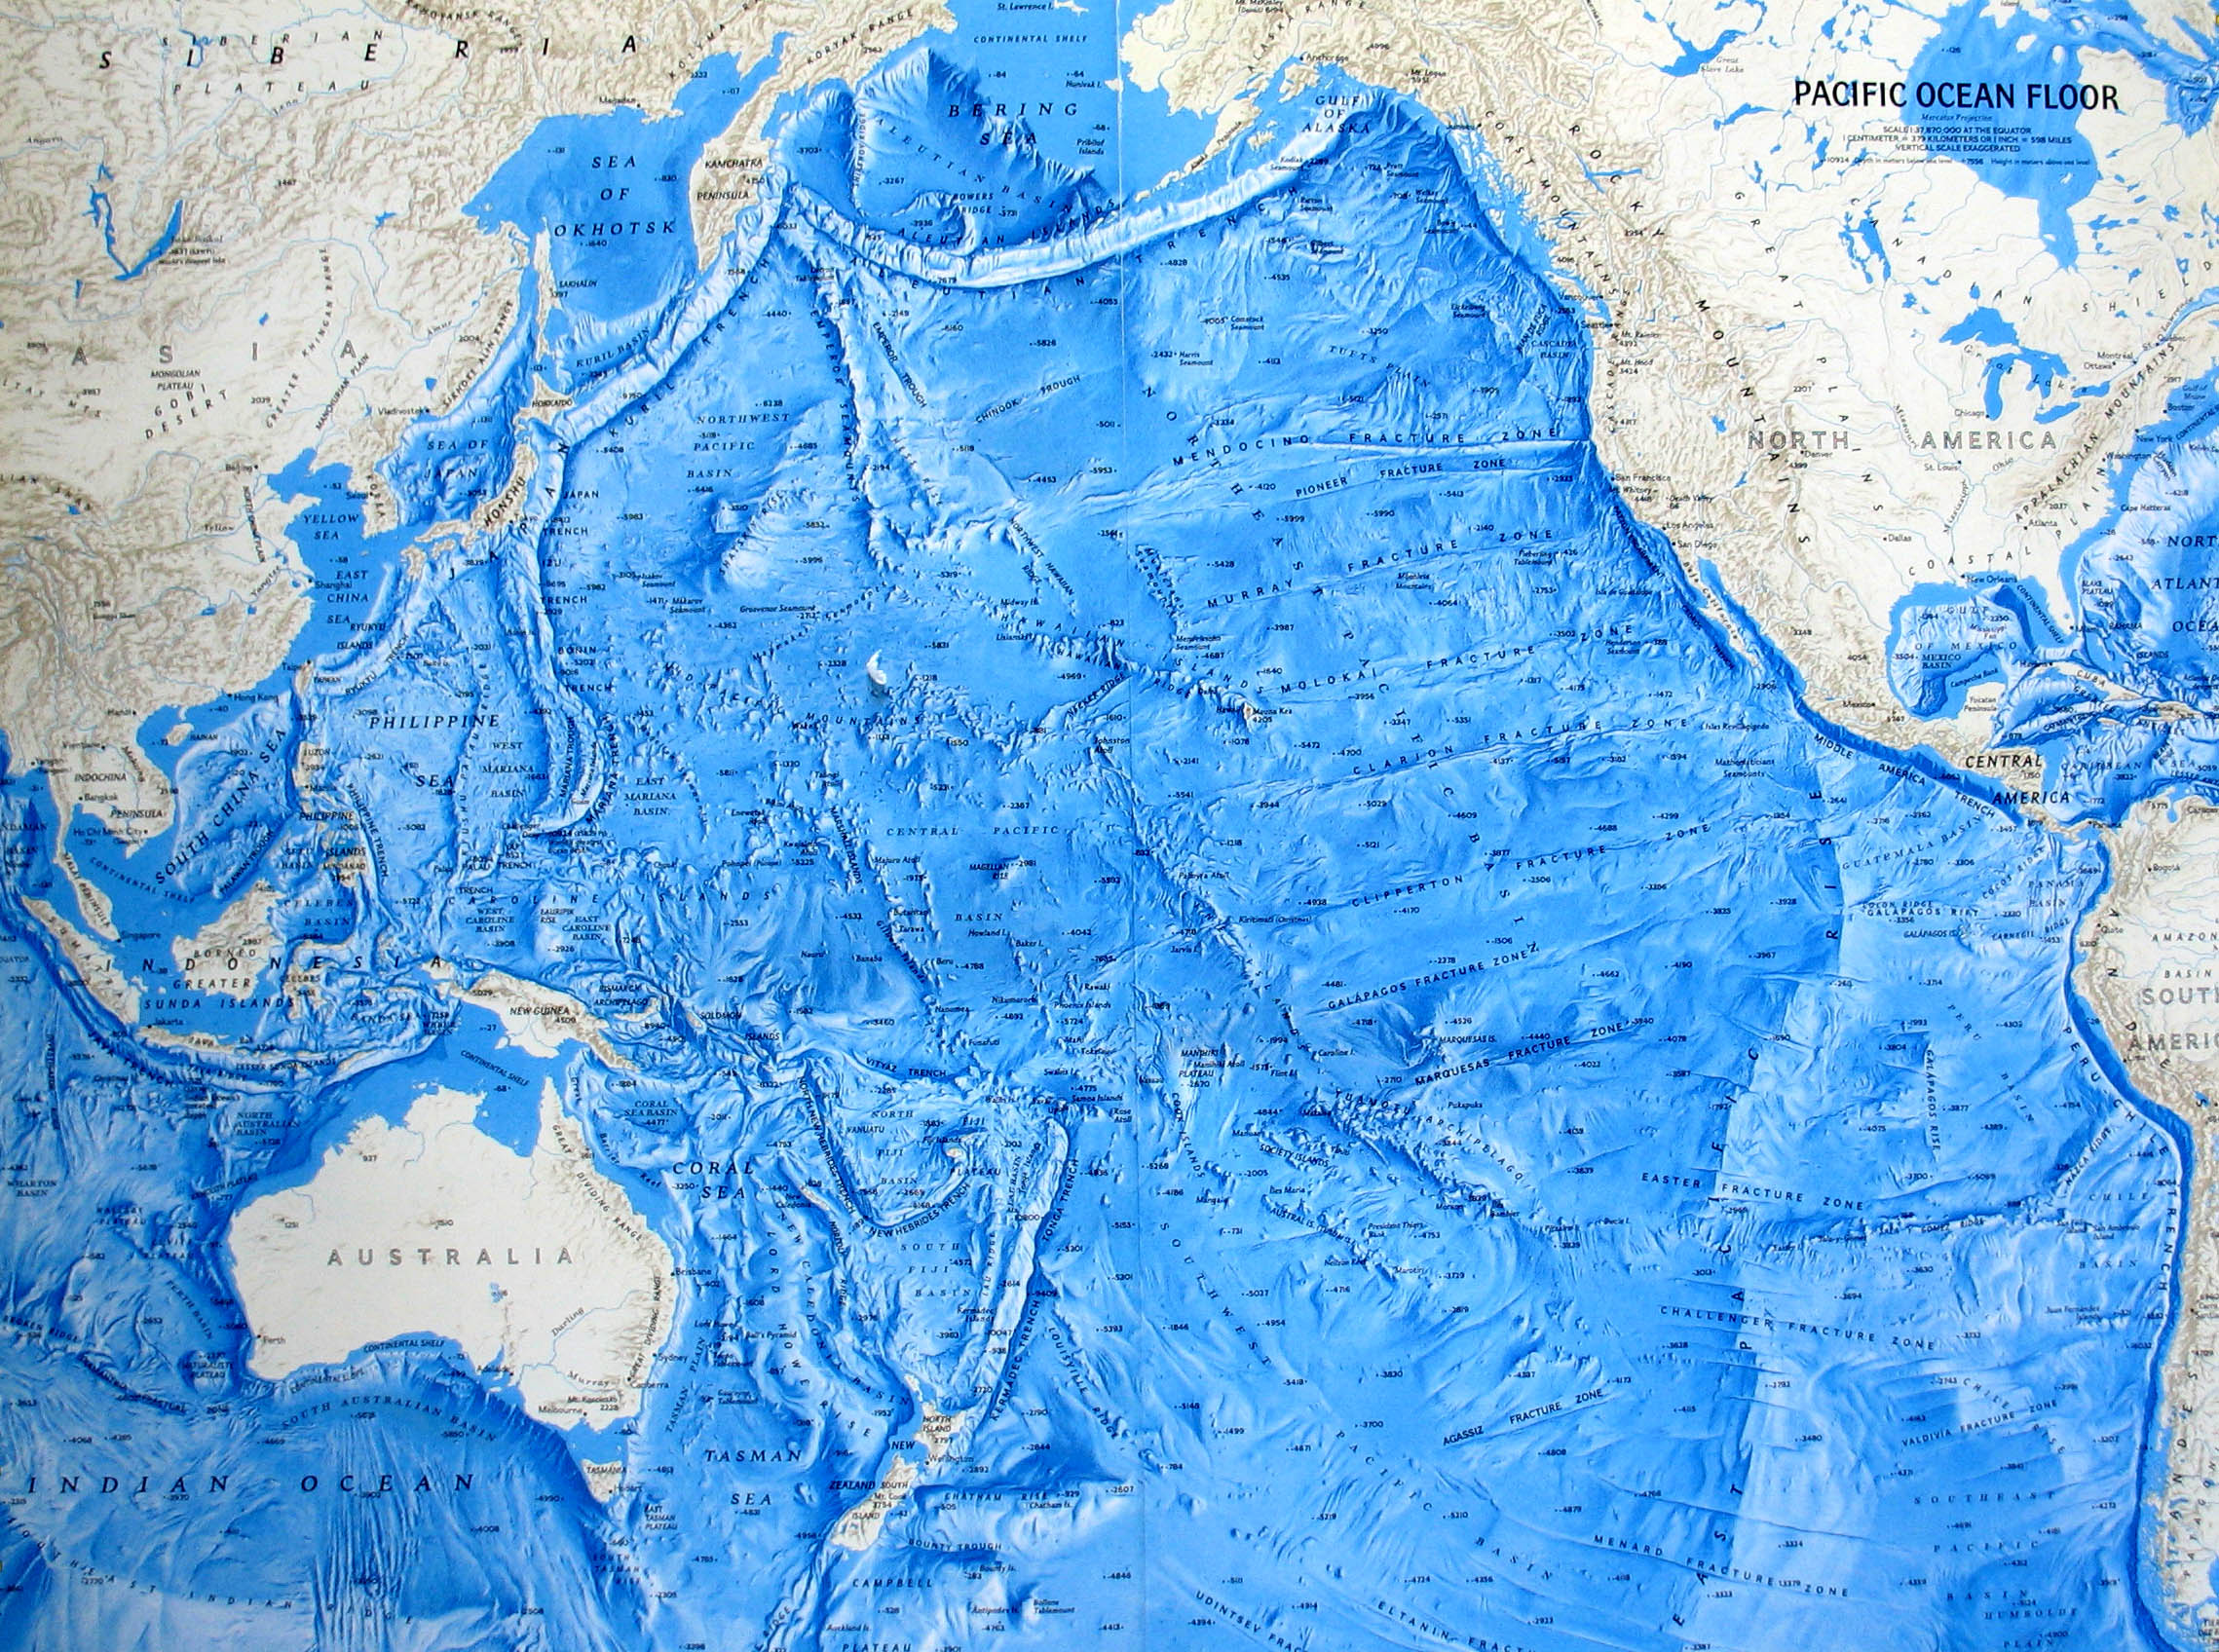 Ocean Floor Relief Maps | Detailed Maps of Sea and Ocean Depths - Foto ...